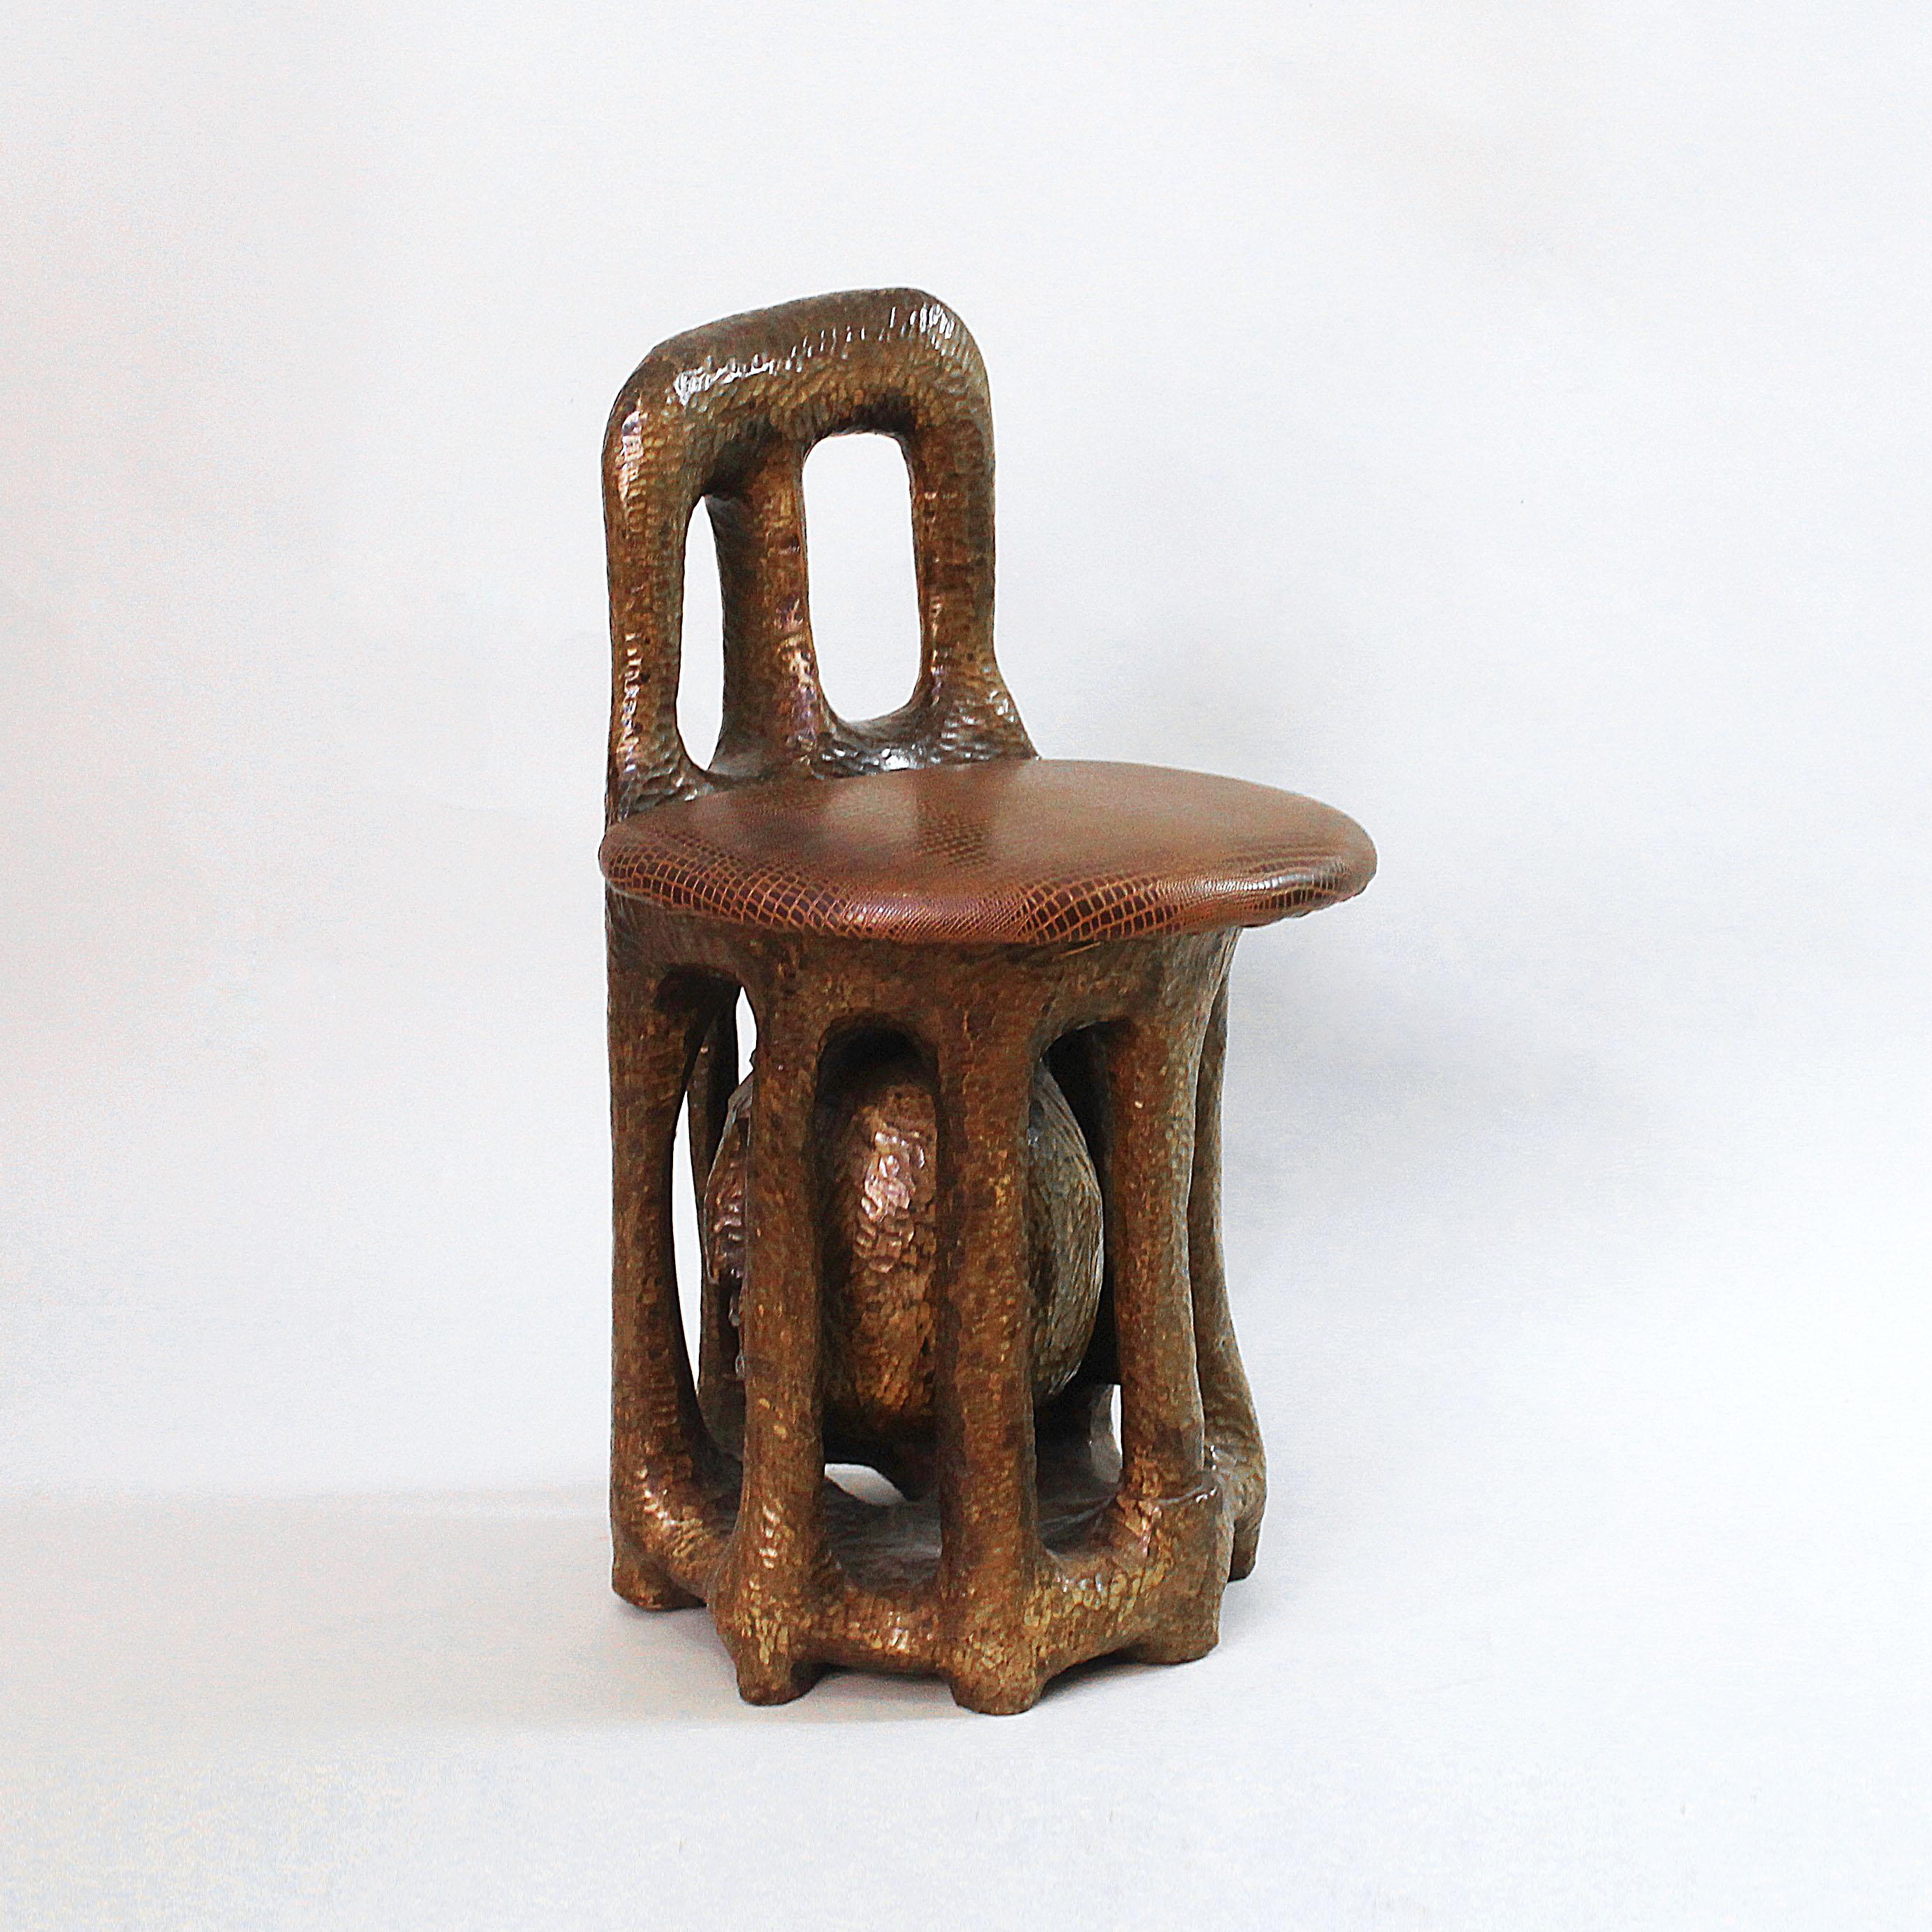 British Sol Garson Signed Sculptural Chair 1970s Art Hand Carved Wood Sculpture Mandela For Sale